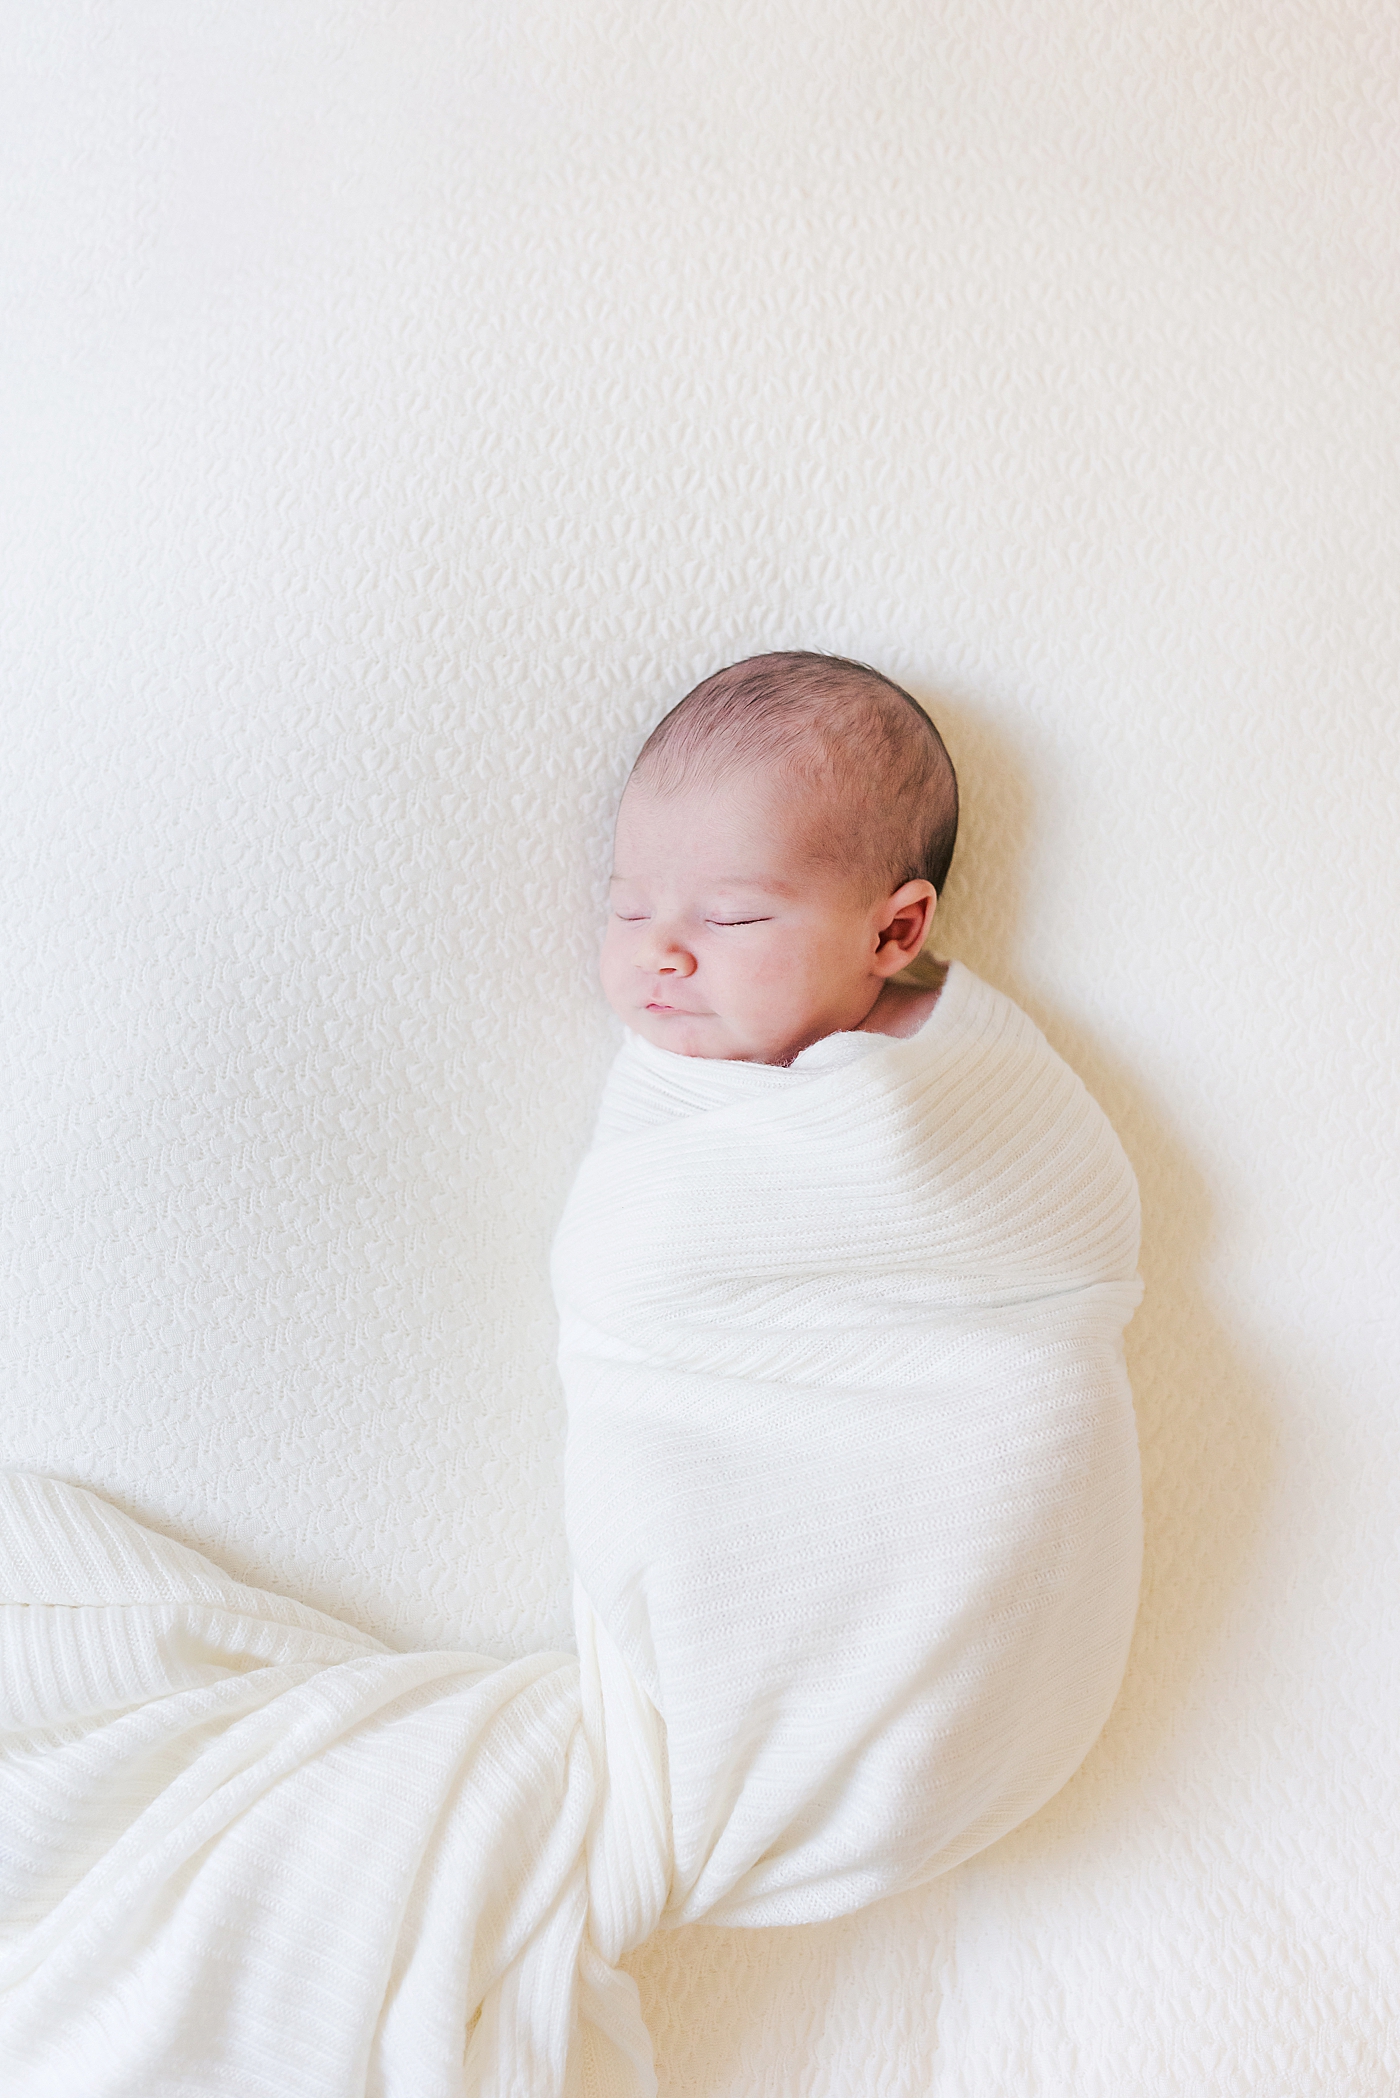 Baby girl in a white swaddle sleeping | Photo by Ballantyne newborn photographer Anna Wisjo 